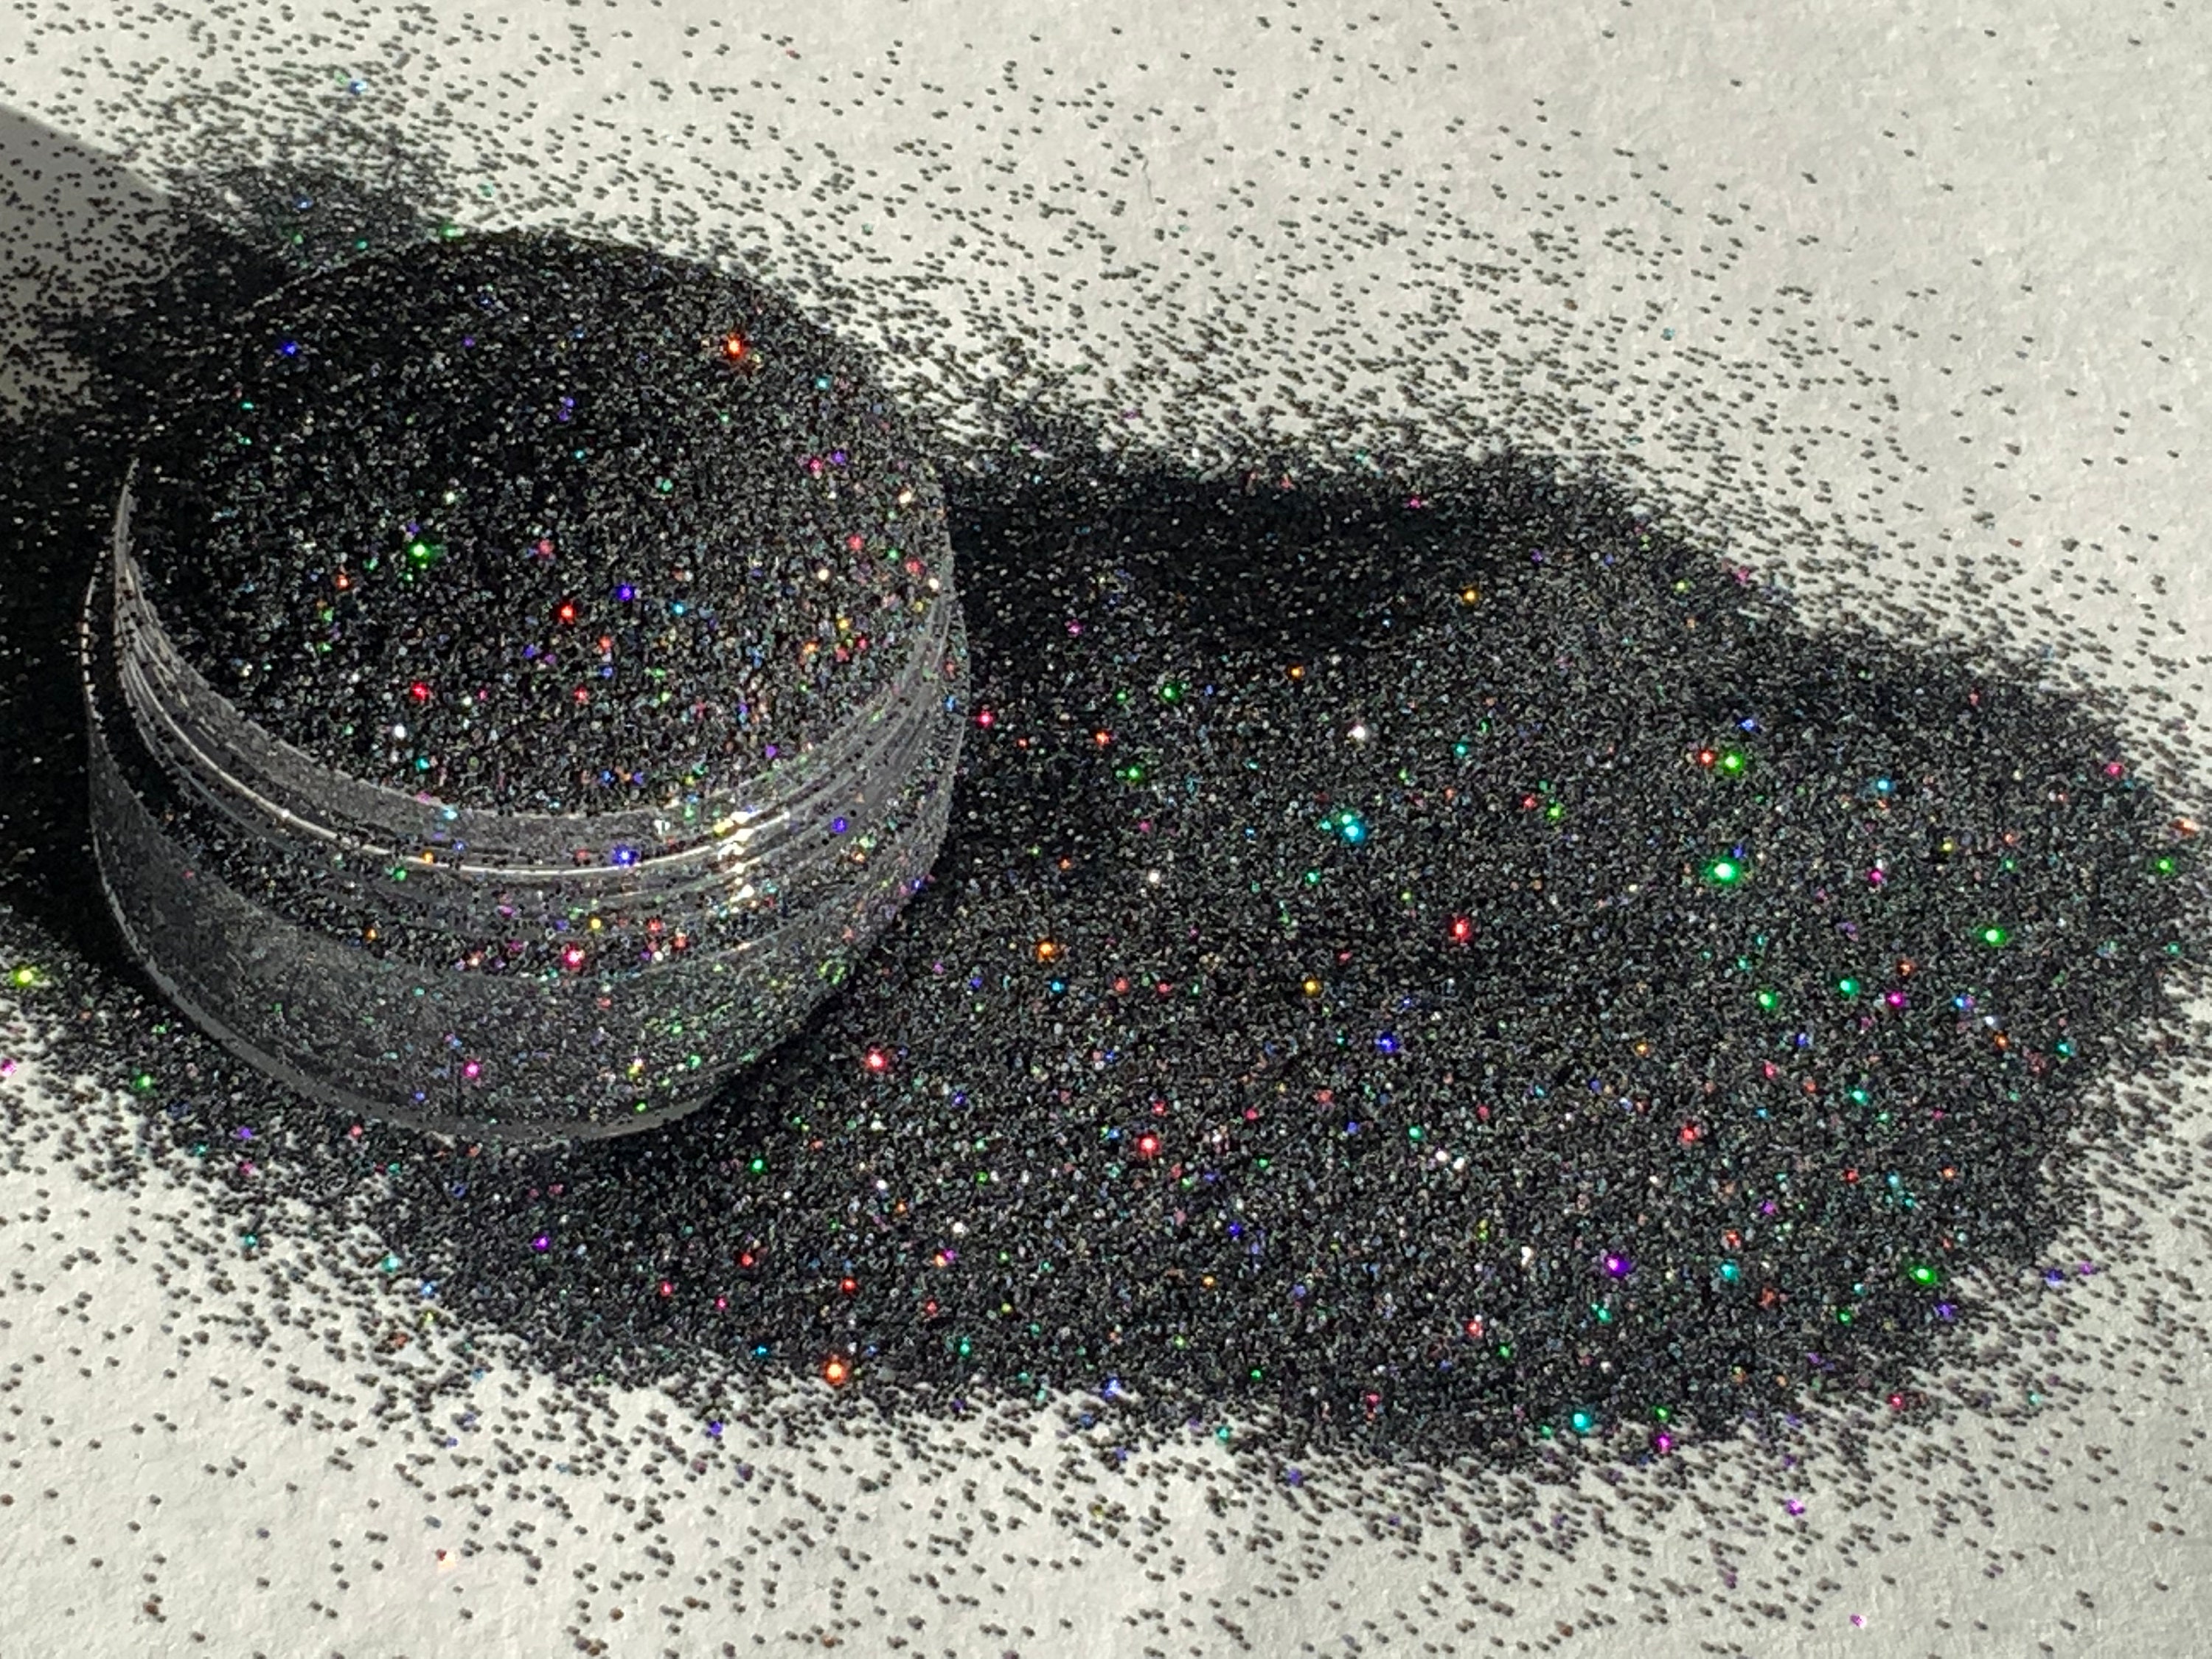 1 oz PURPLE FINE GLITTER Mica Crafts Silk Microfine Glitter Powder Free  Shipping